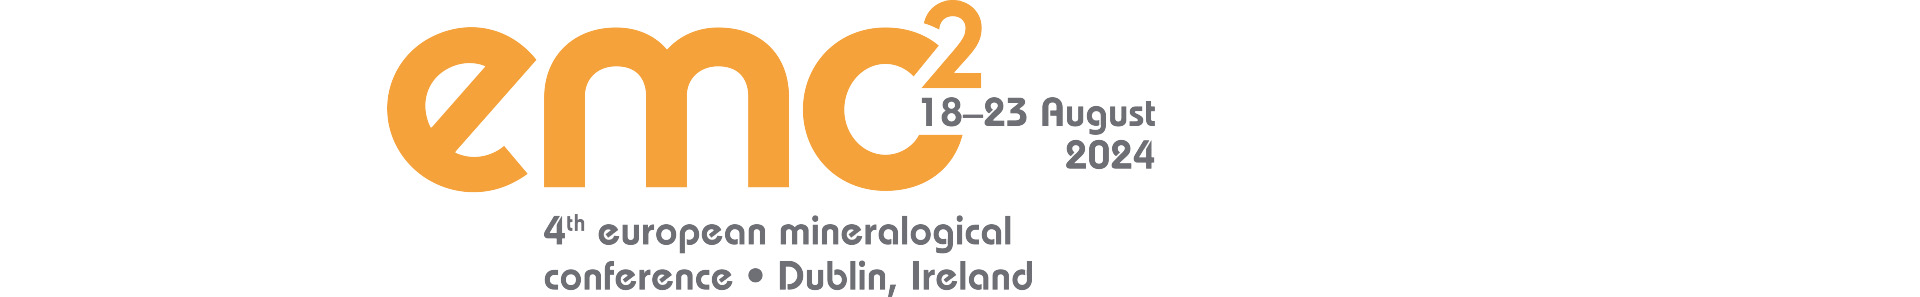 European Mineralogical Conference 2024, Dublin